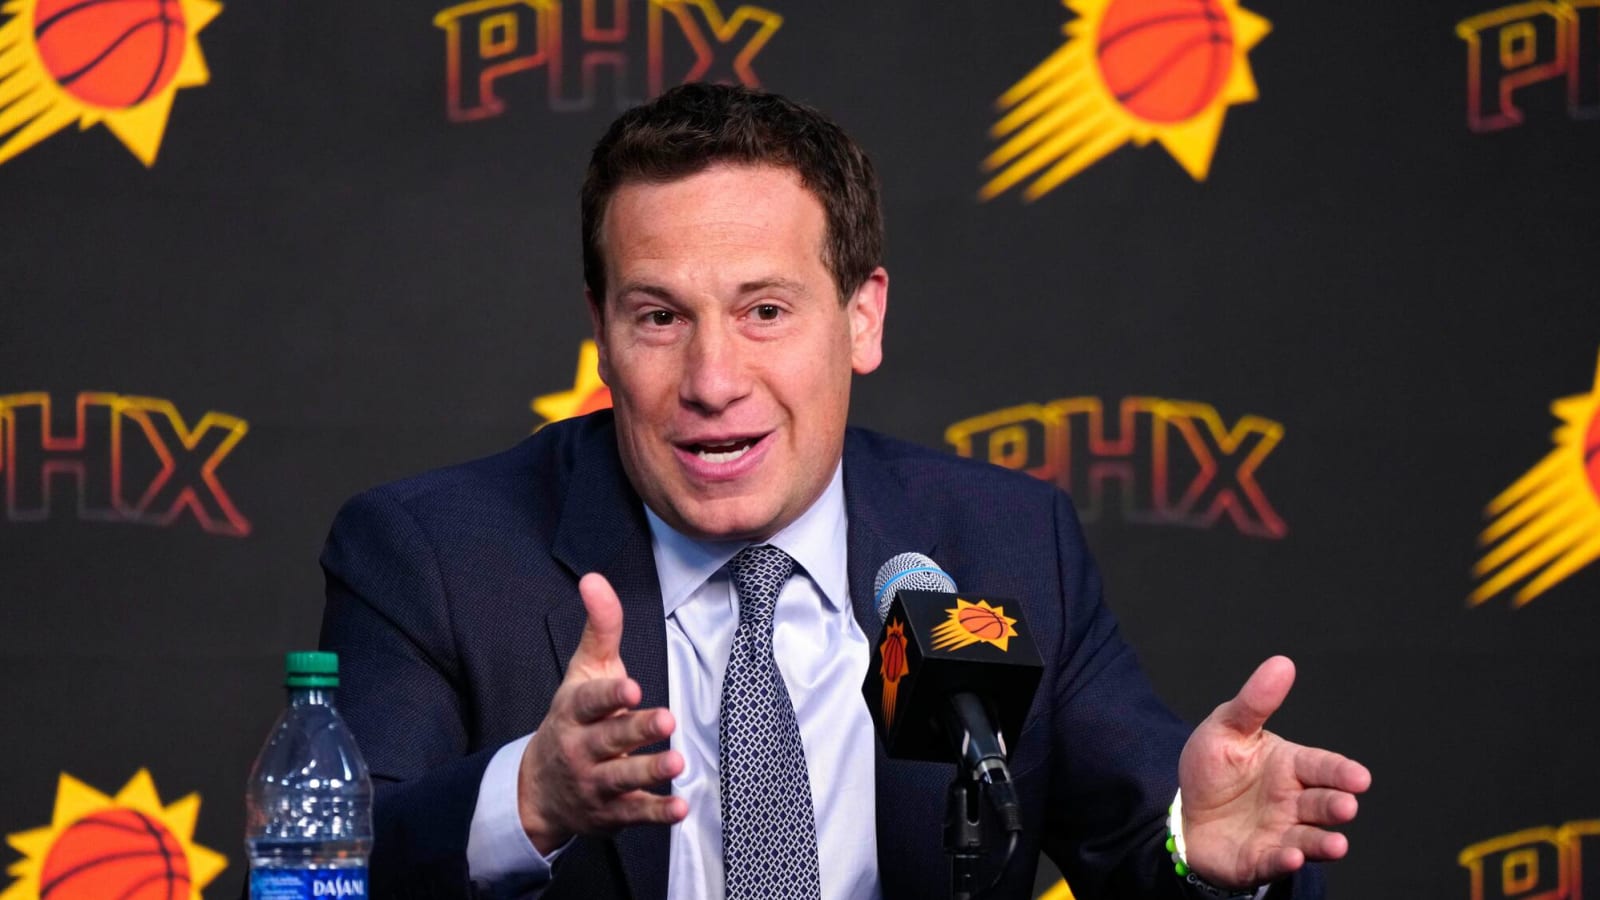 NBA, WNBA announce partnership with Mat Ishbia’s mortgage company